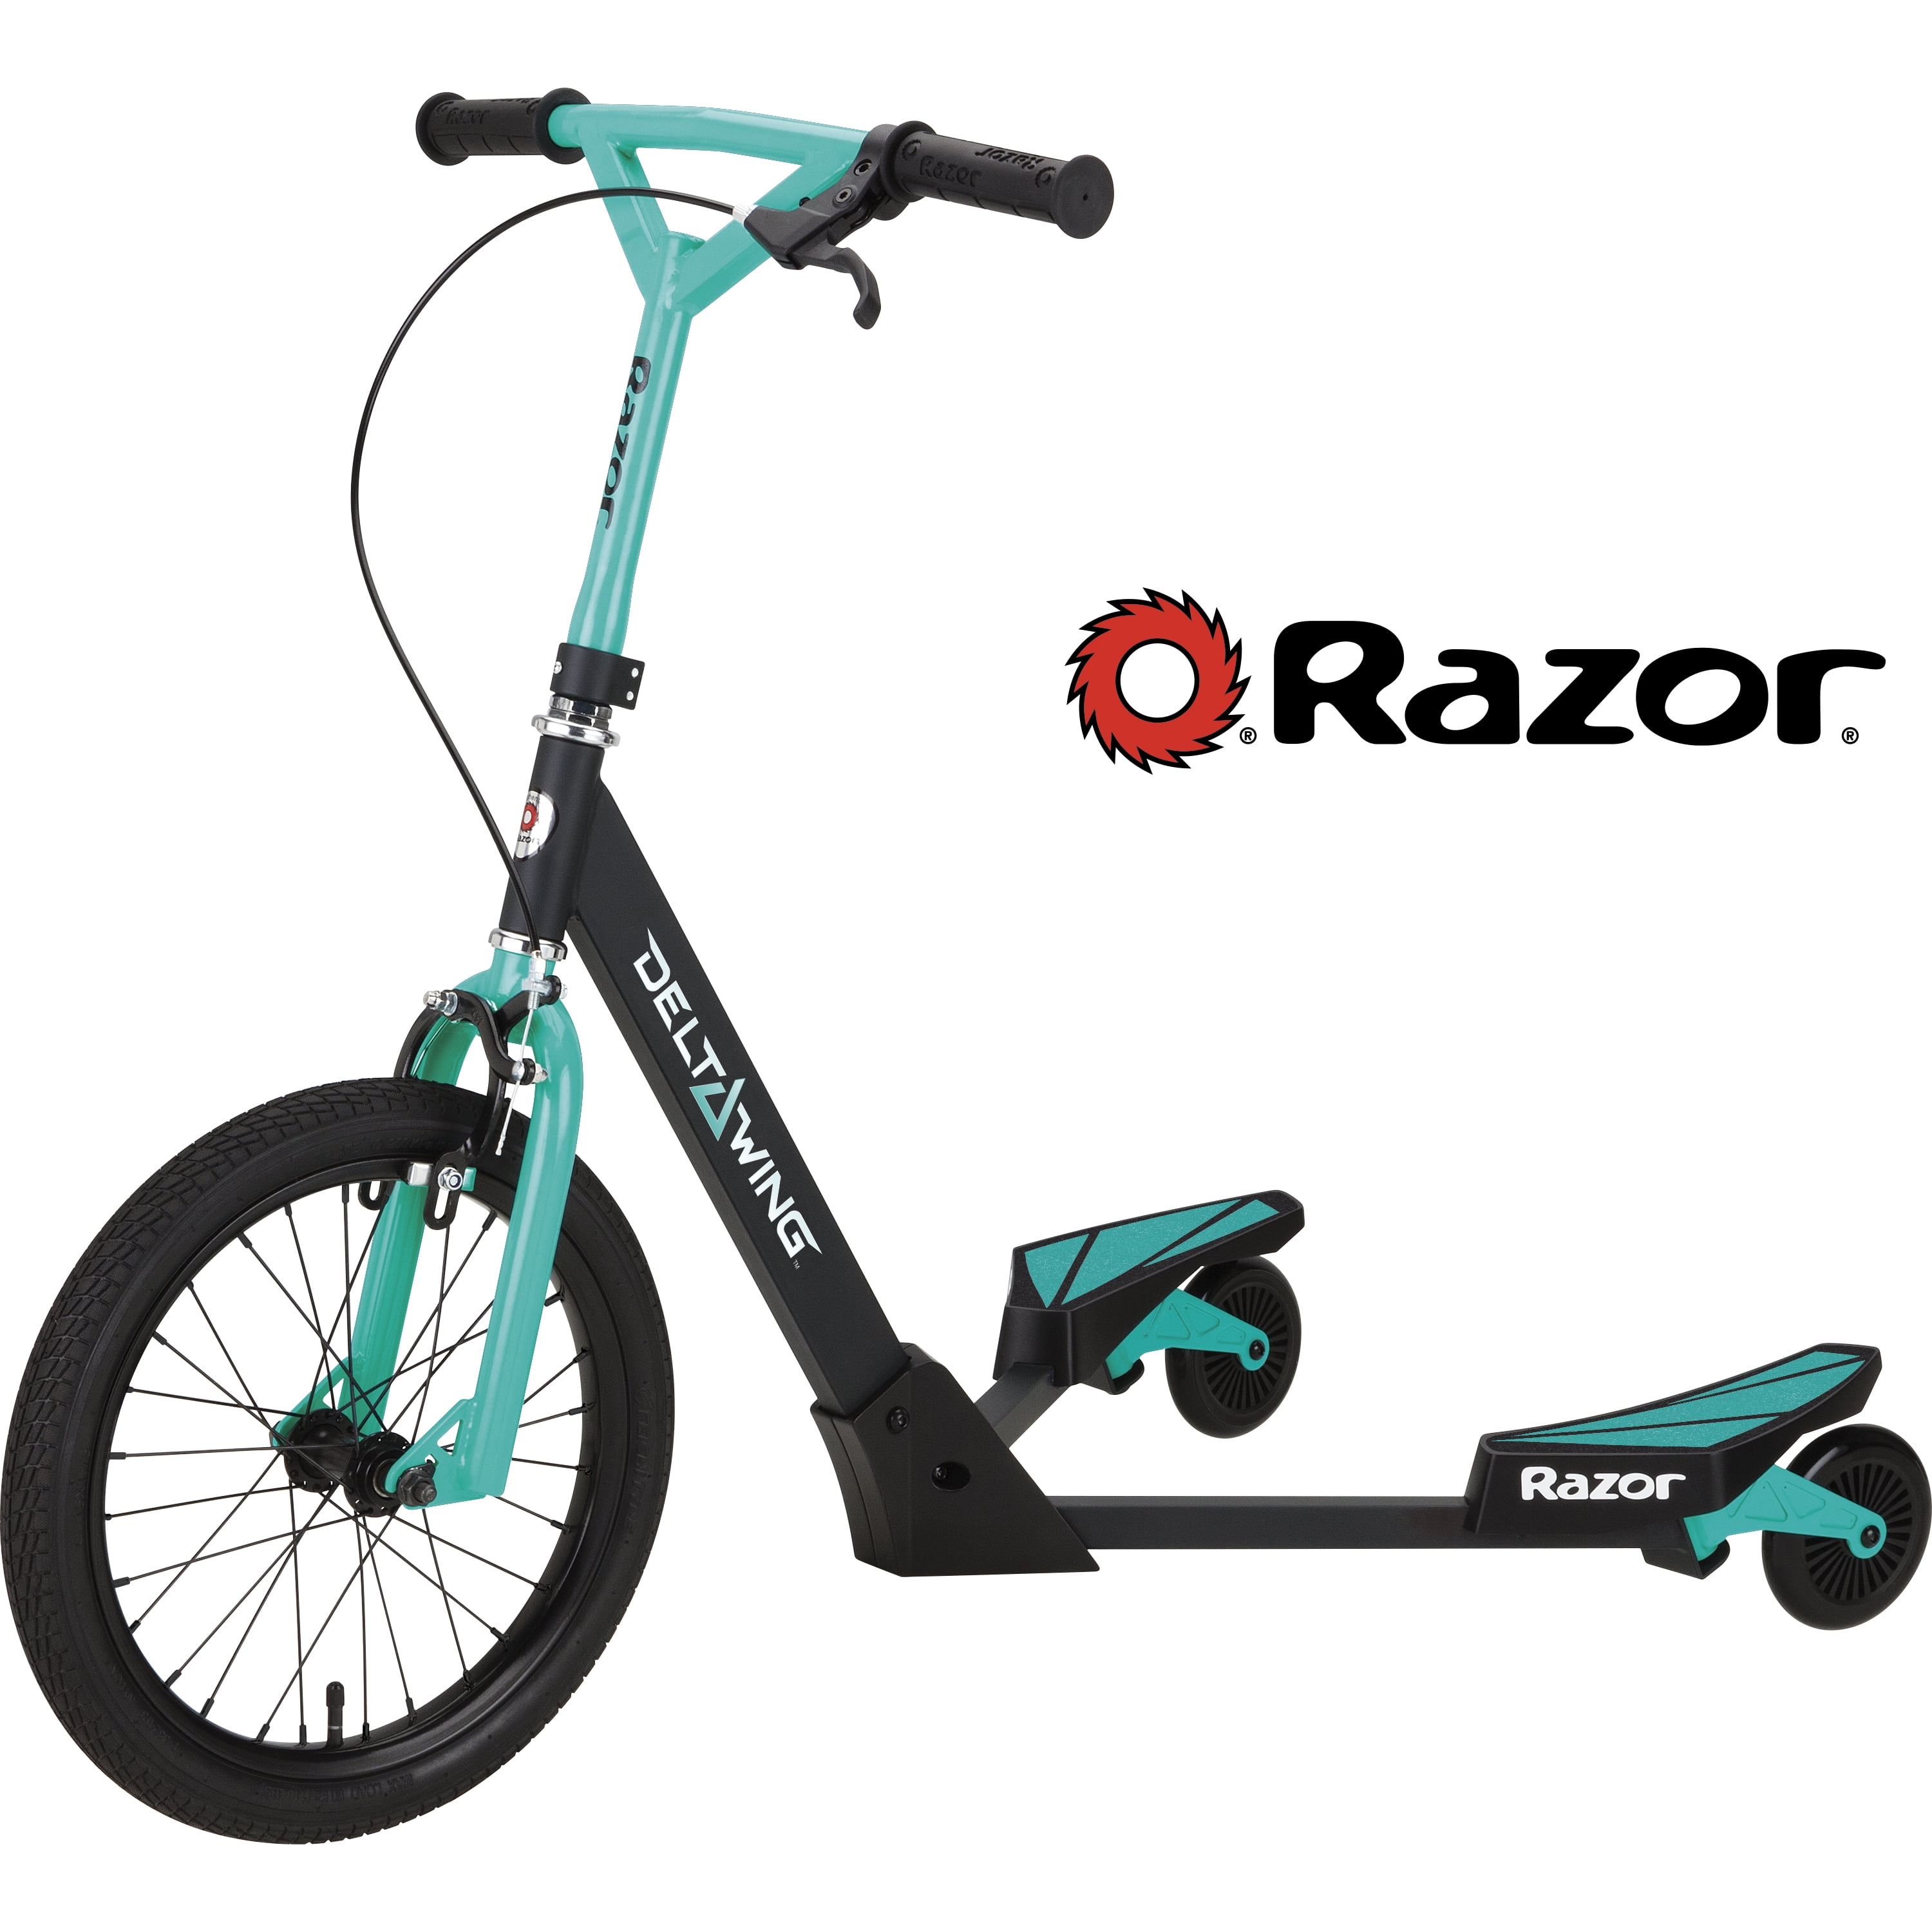 three wheel razor scooter